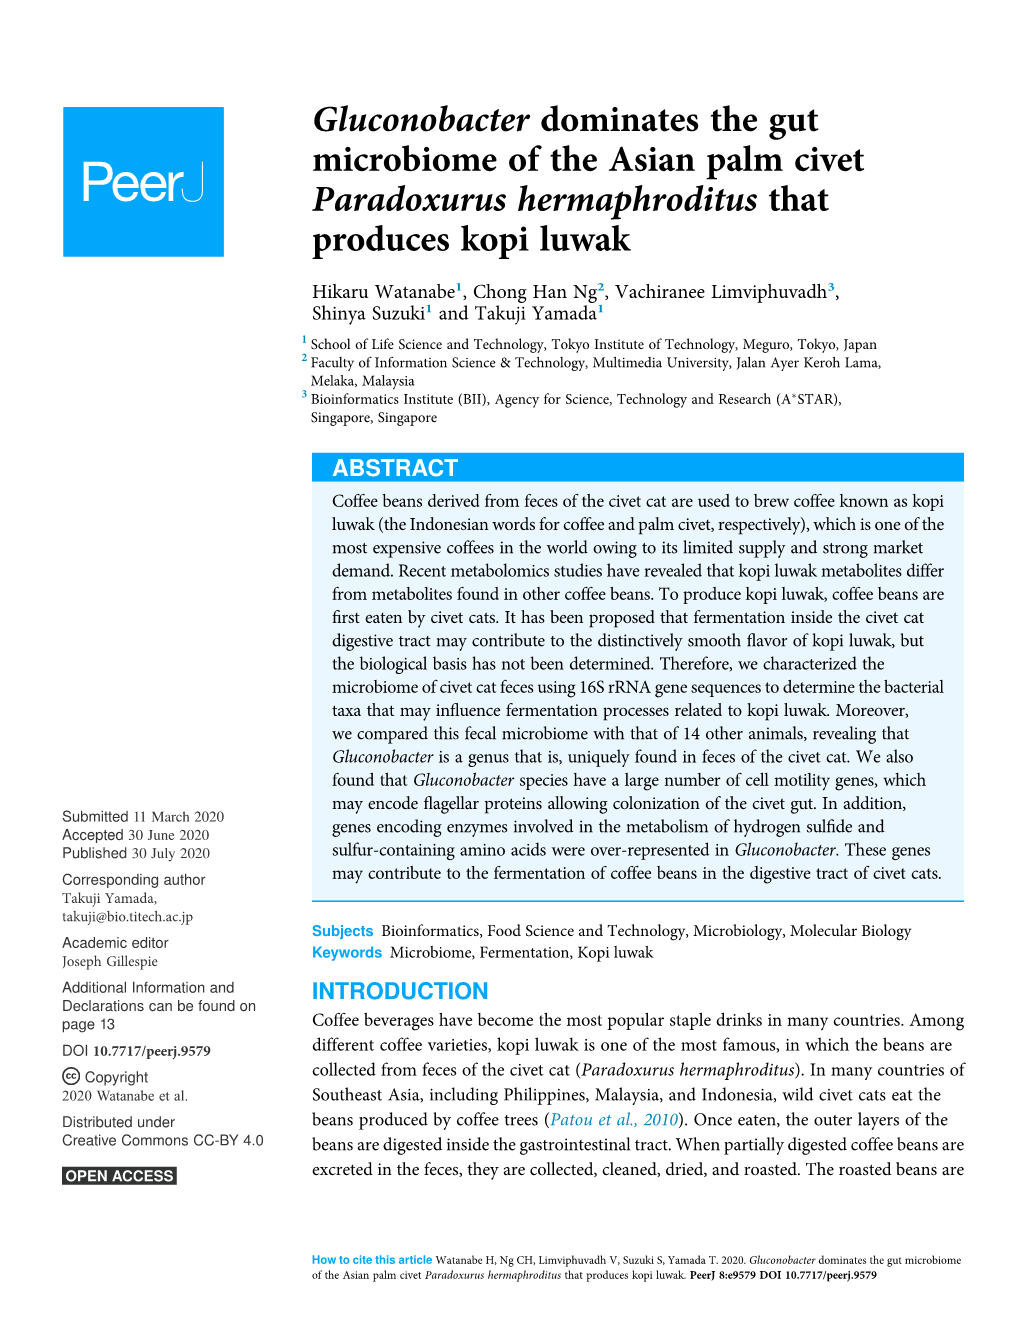 Gluconobacter Dominates the Gut Microbiome of the Asian Palm Civet Paradoxurus Hermaphroditus That Produces Kopi Luwak